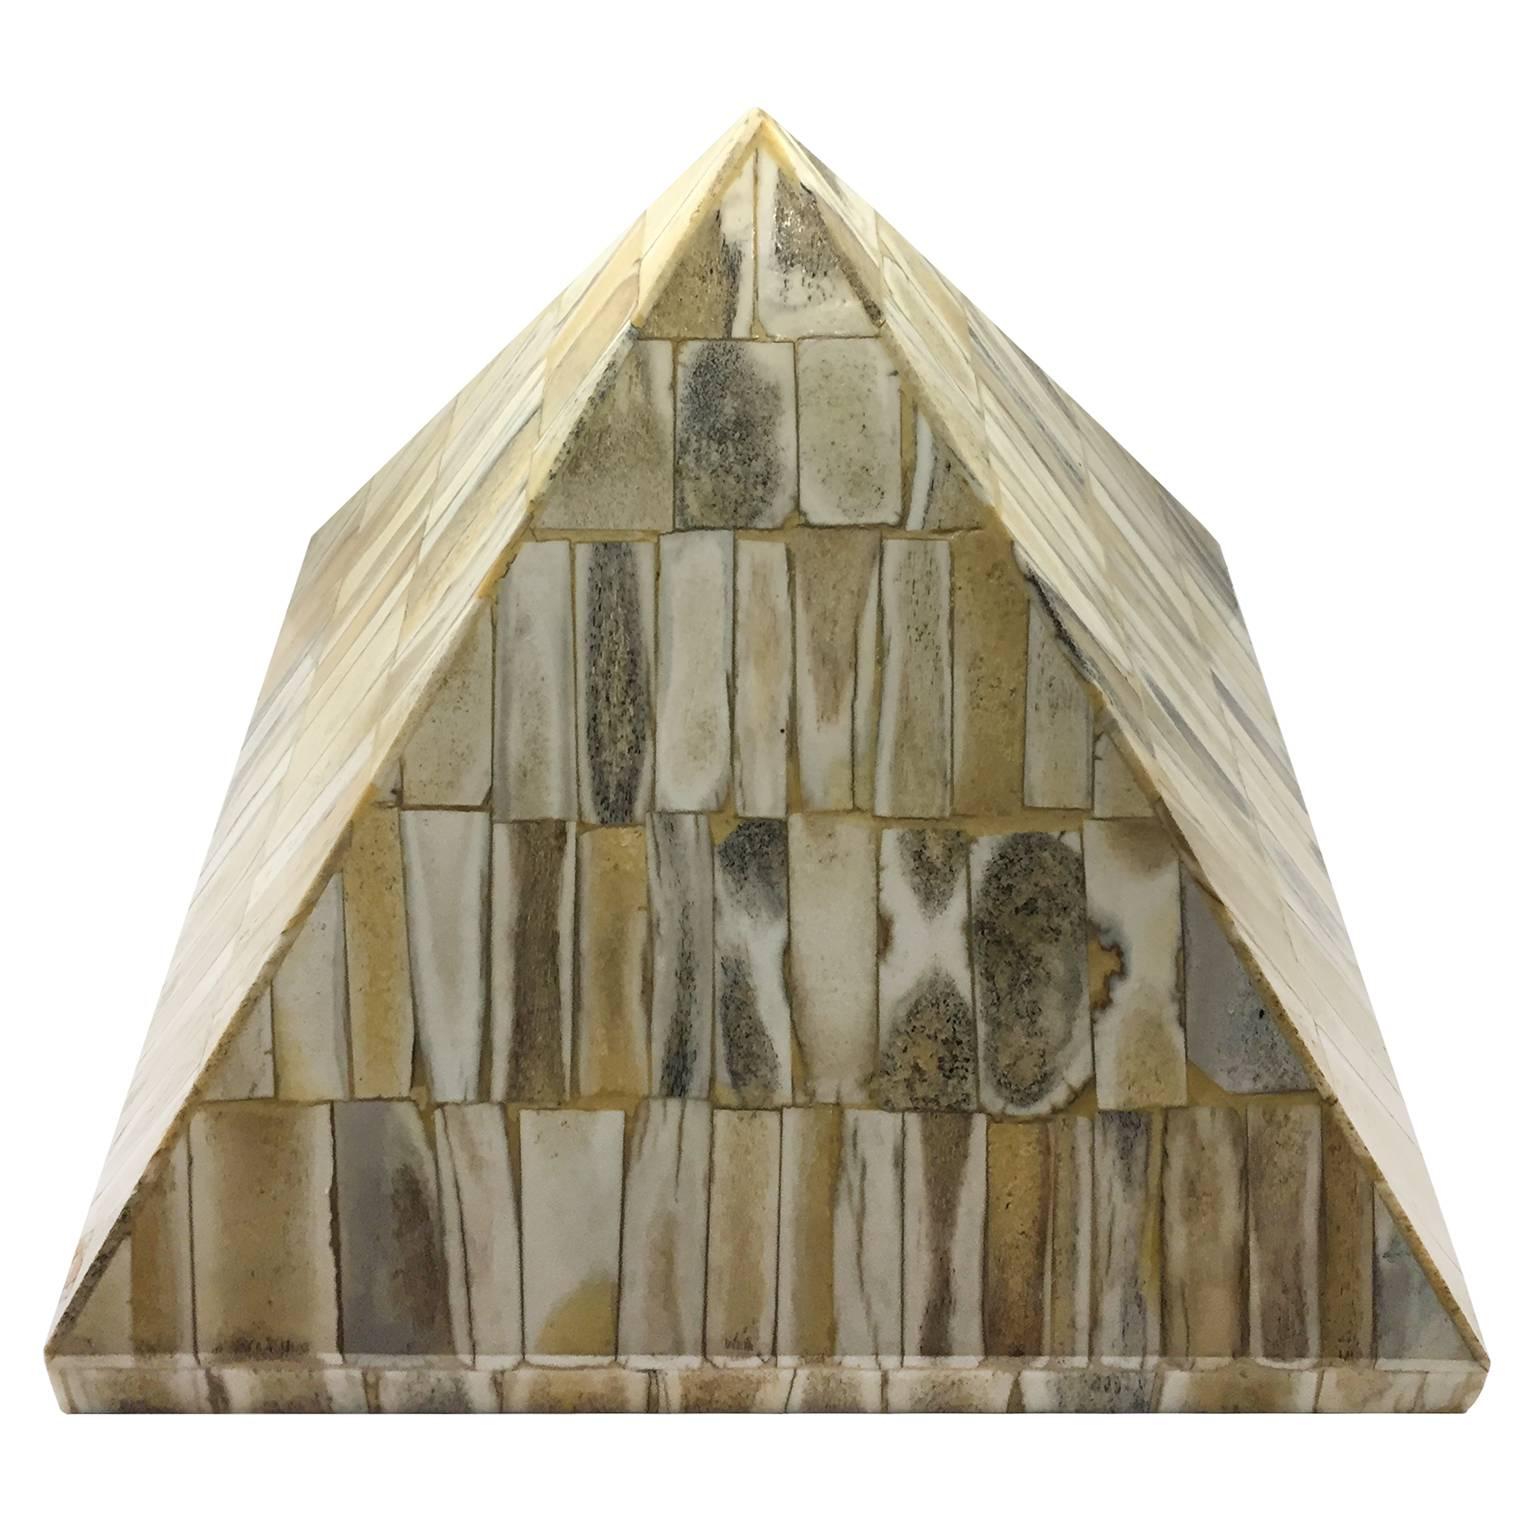 1970s Decorative Tiled Bone Pyramid